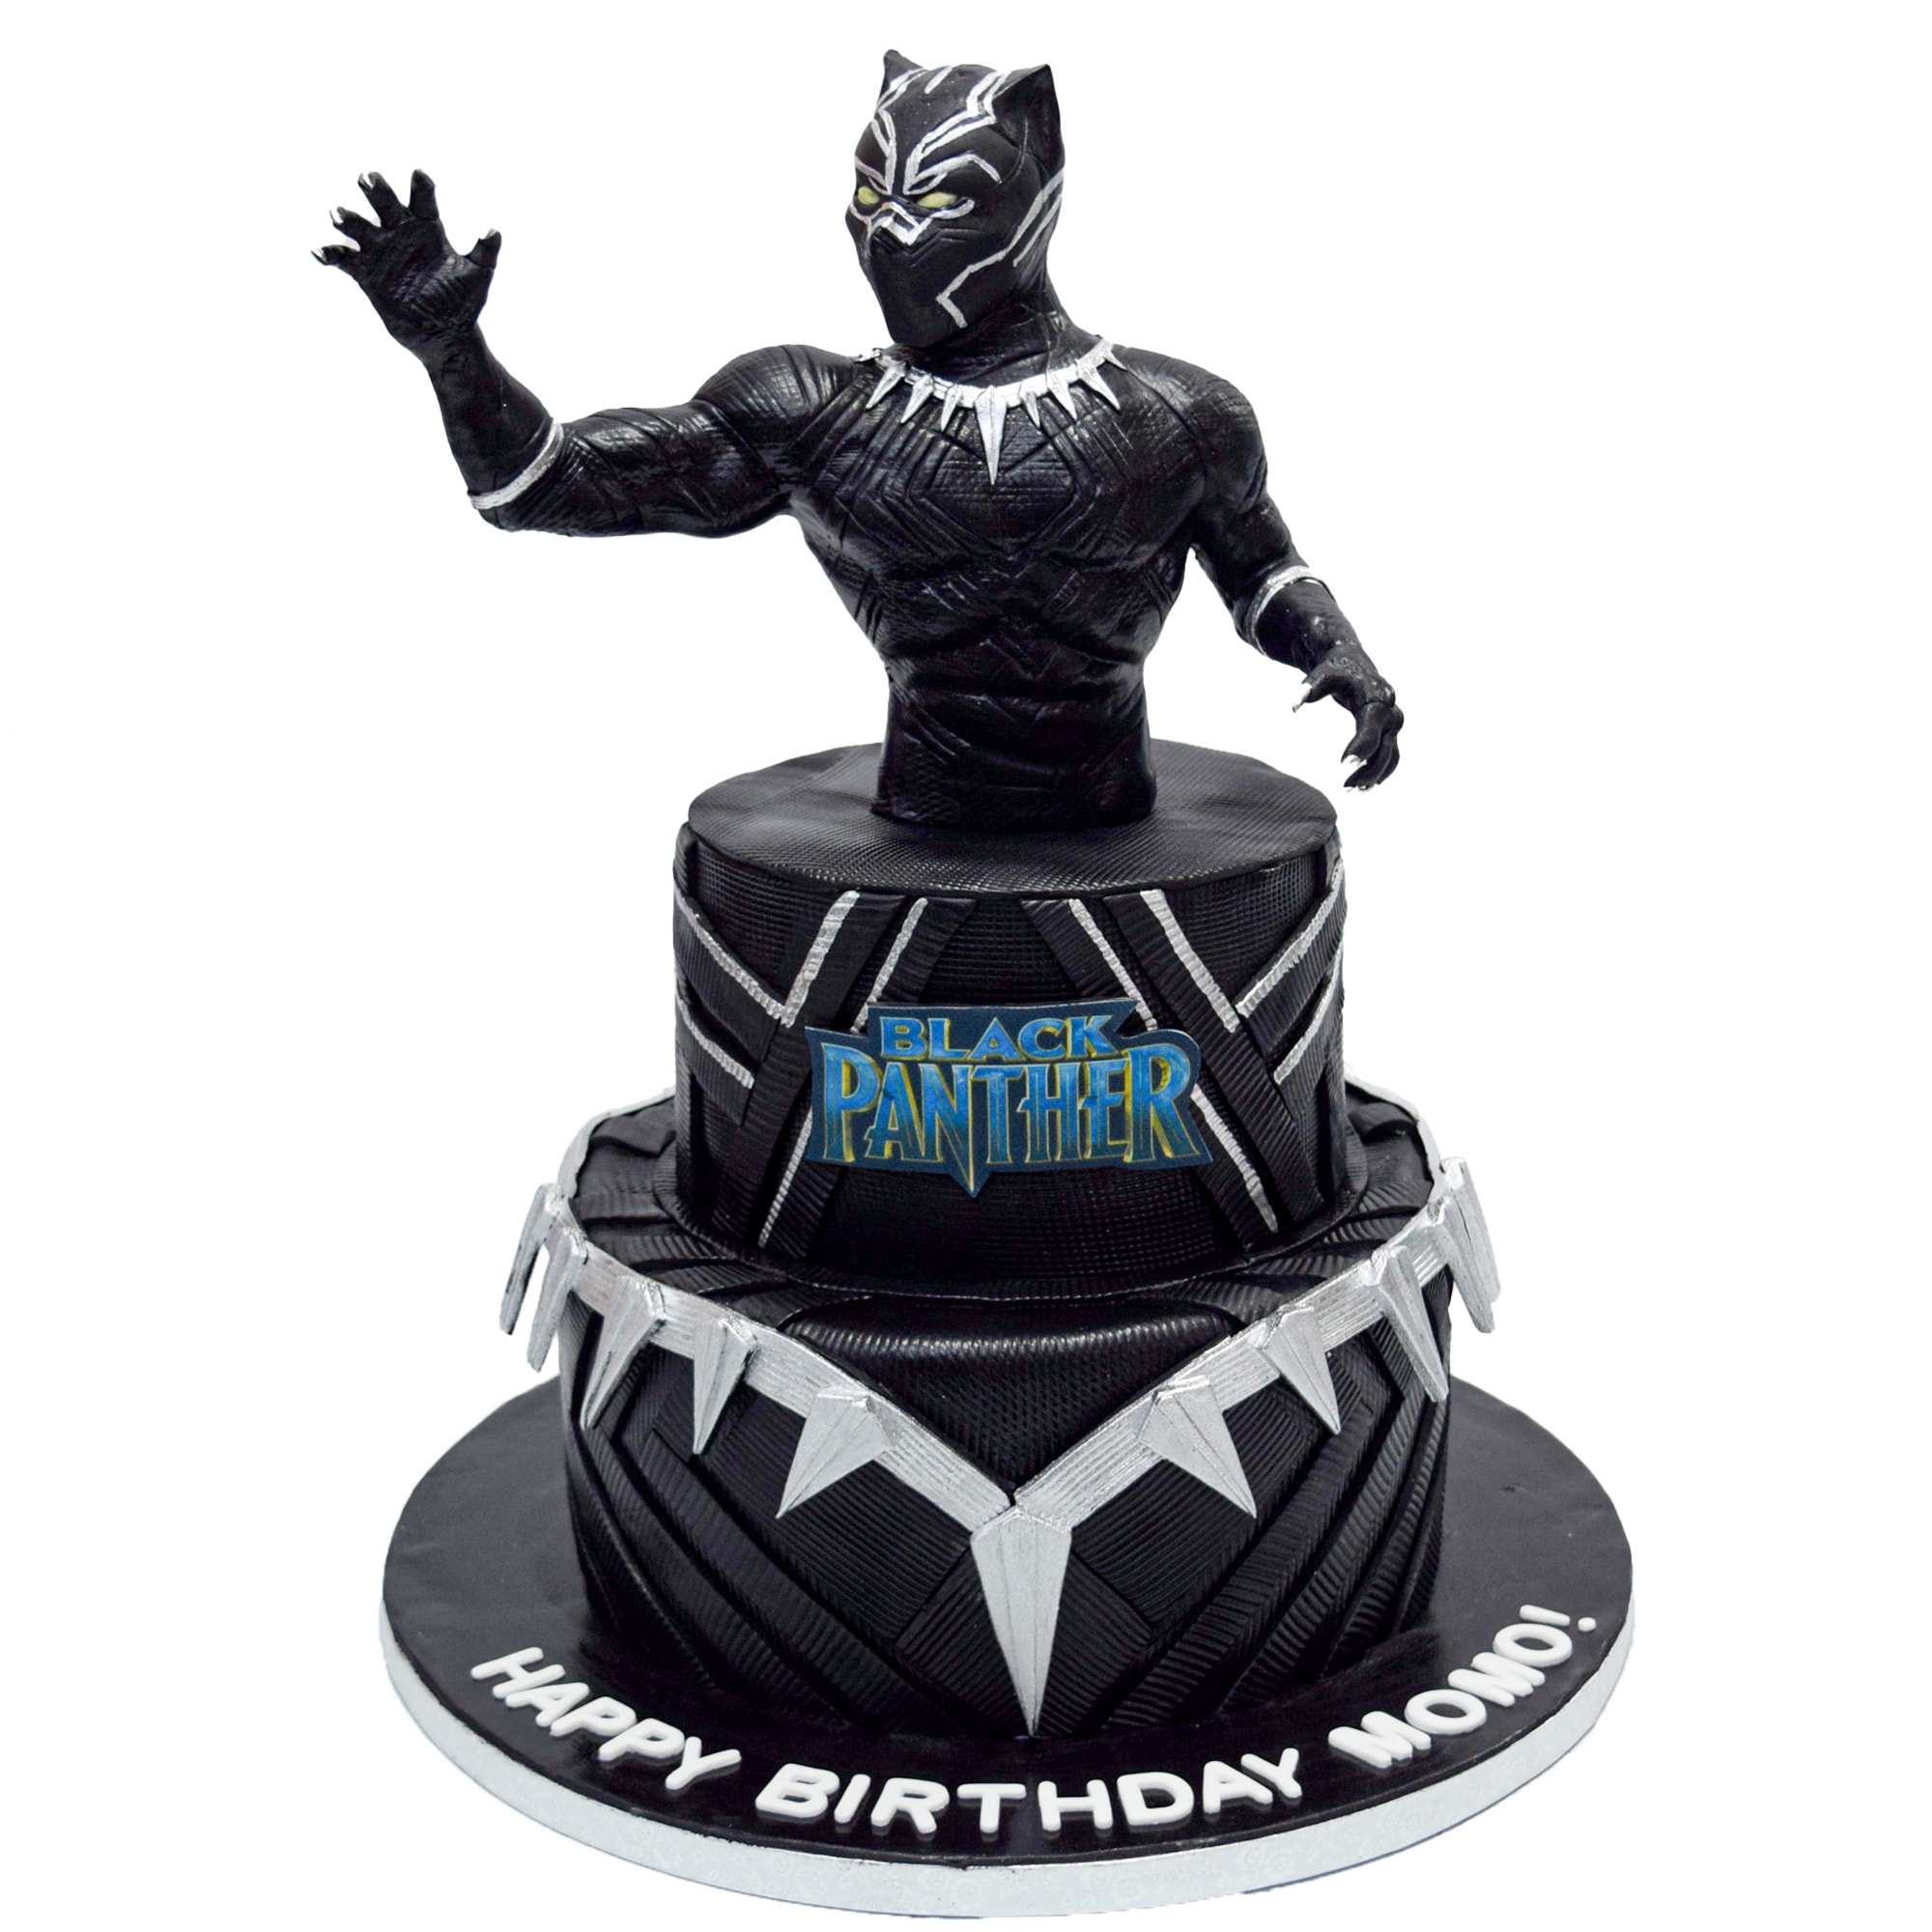 Details more than 69 black panther theme cake best - awesomeenglish.edu.vn